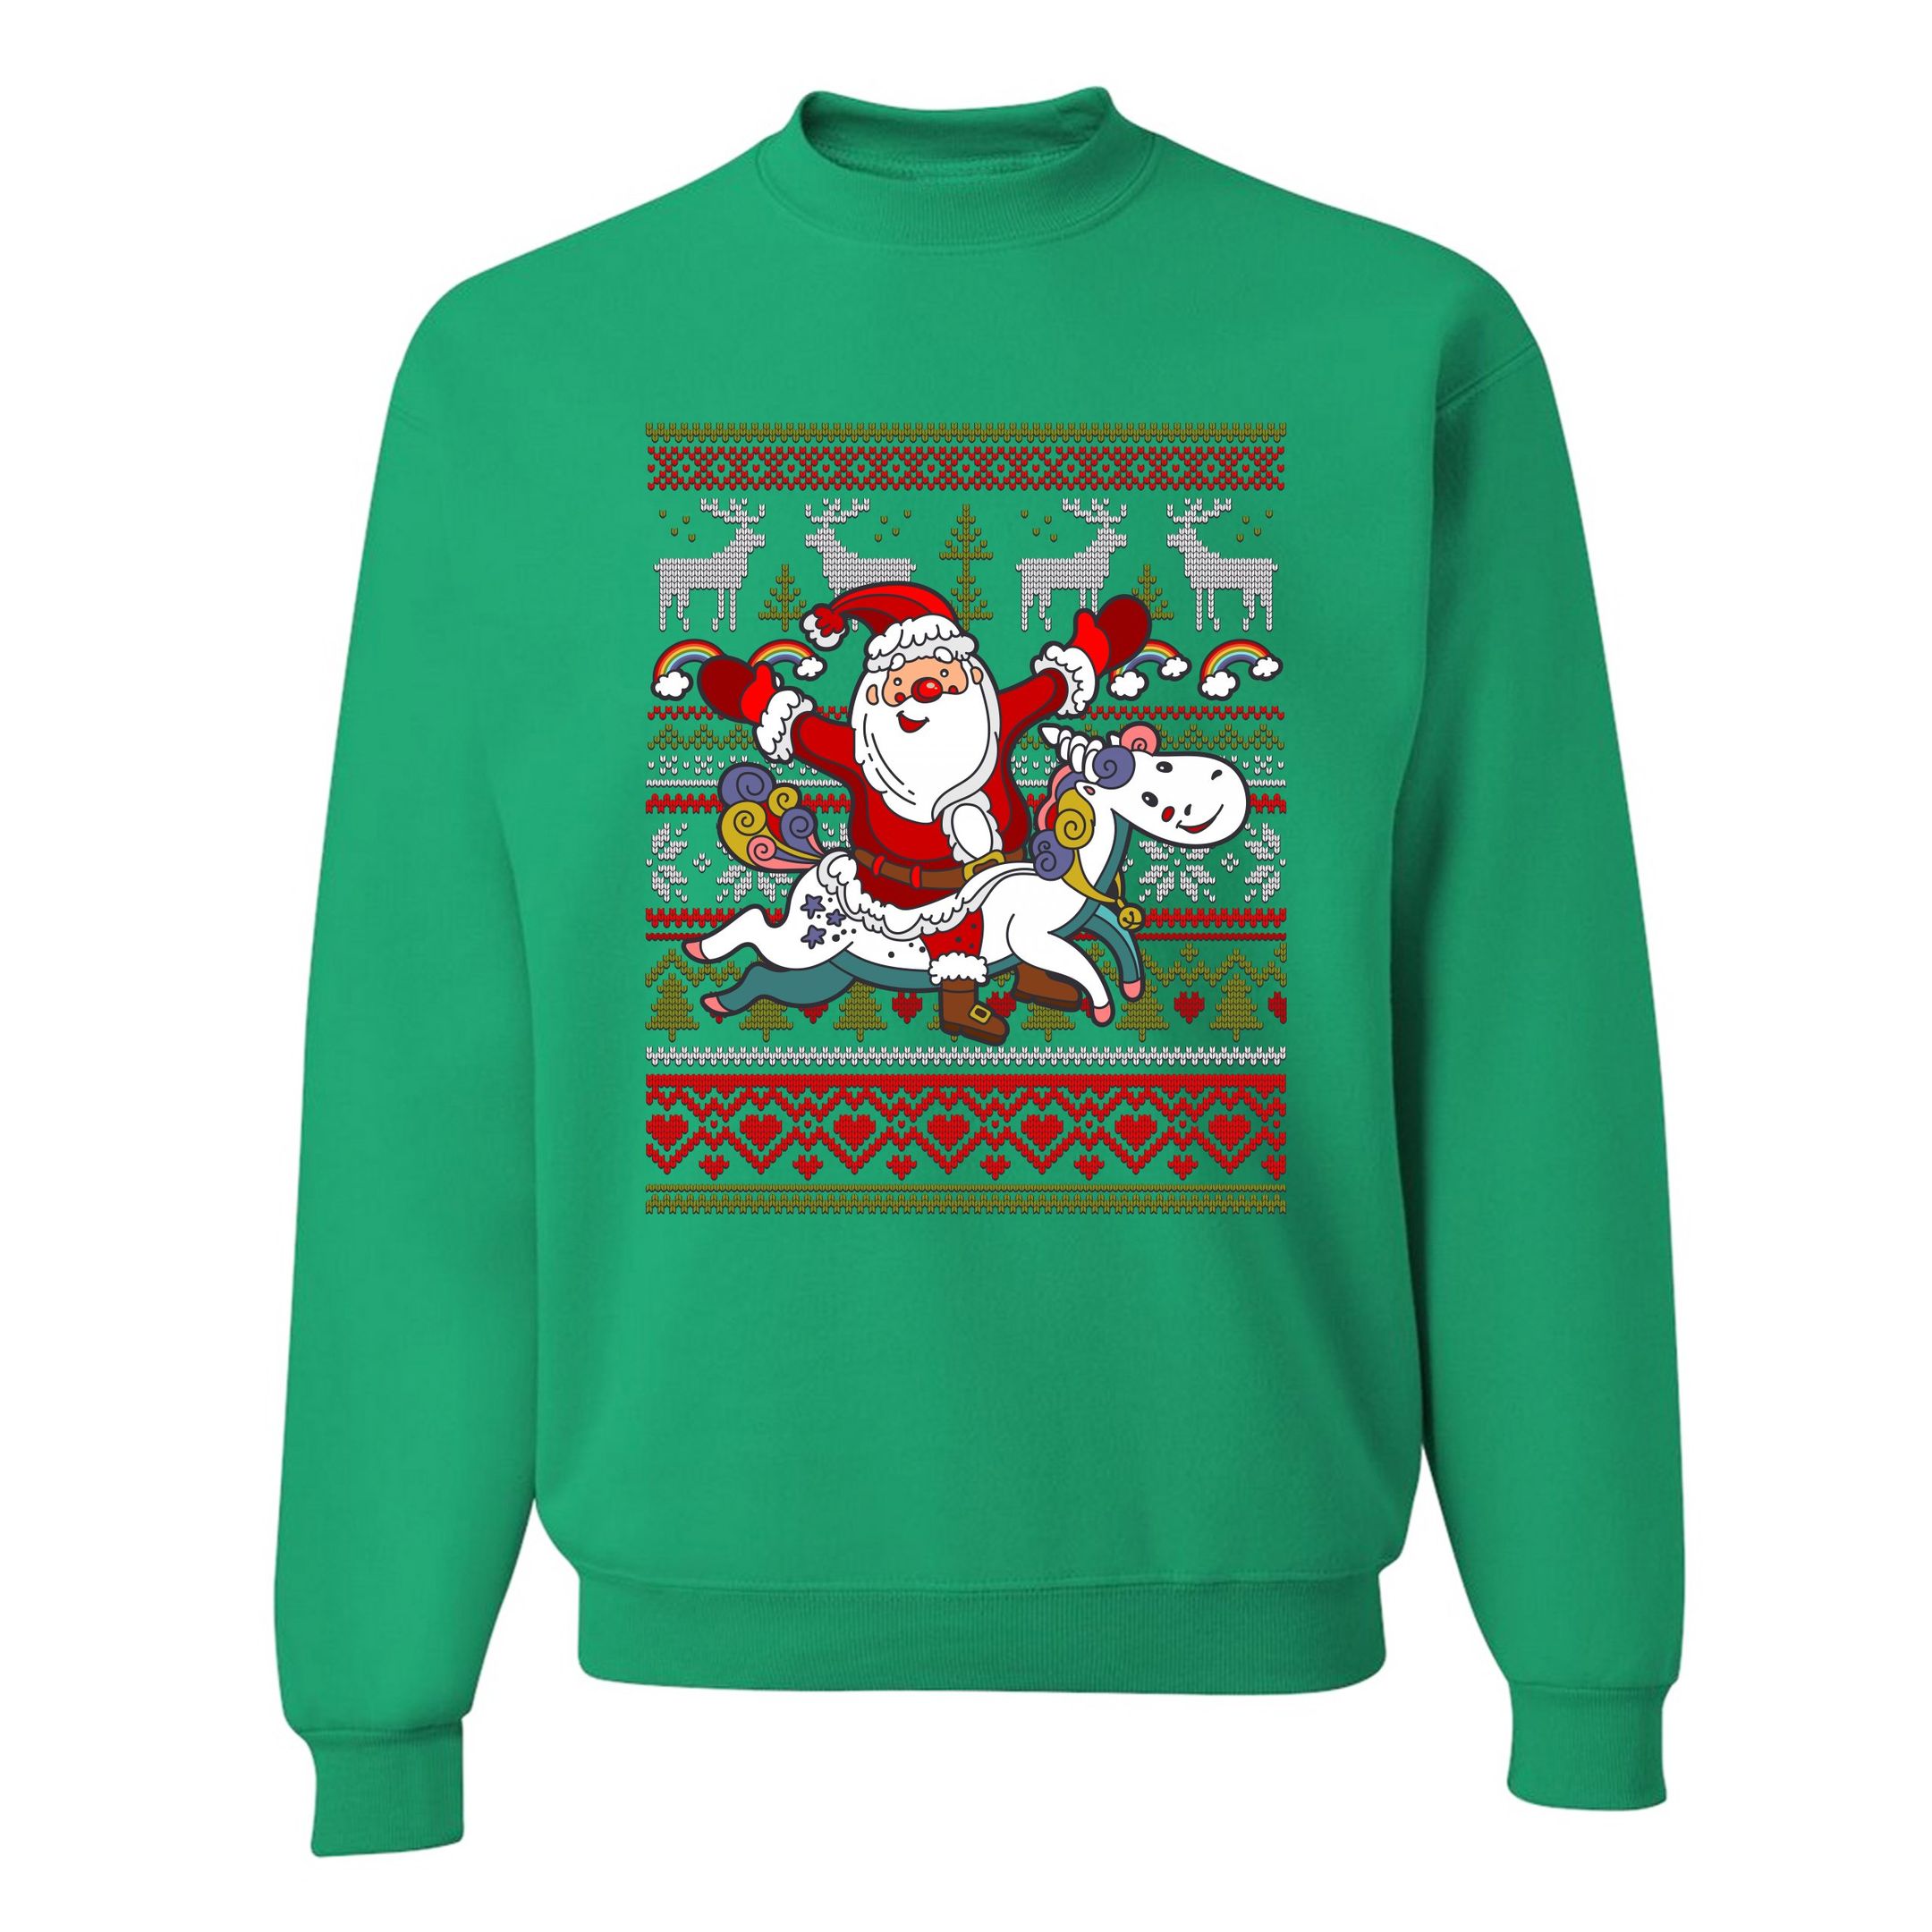 Santa Claus Riding a Unicorn Christmas Sweatshirt Style: Sweatshirt, Color: Green